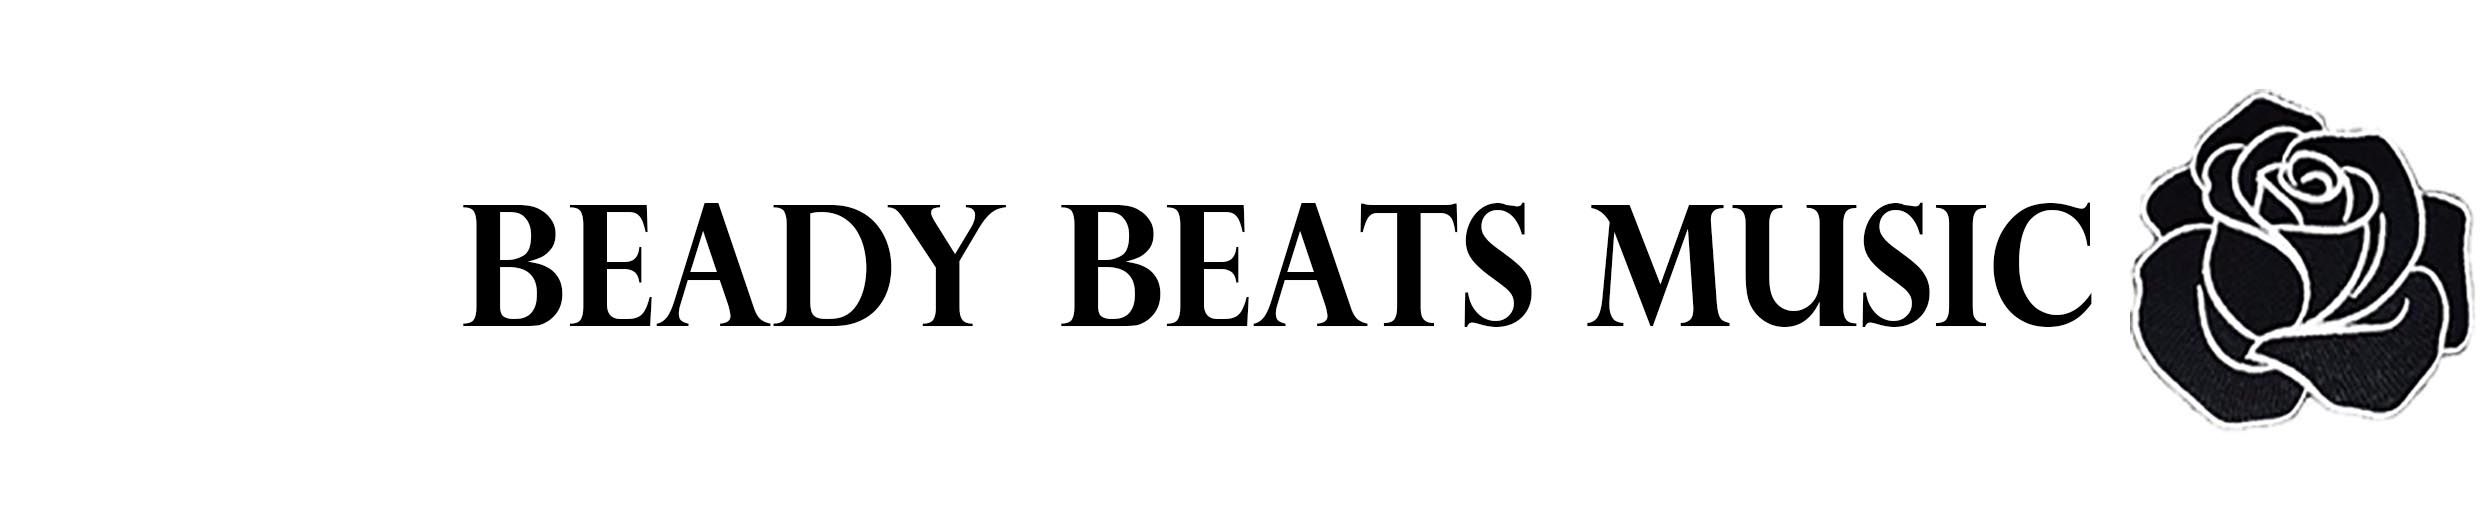 BeadyBeatsBroadcast Logo